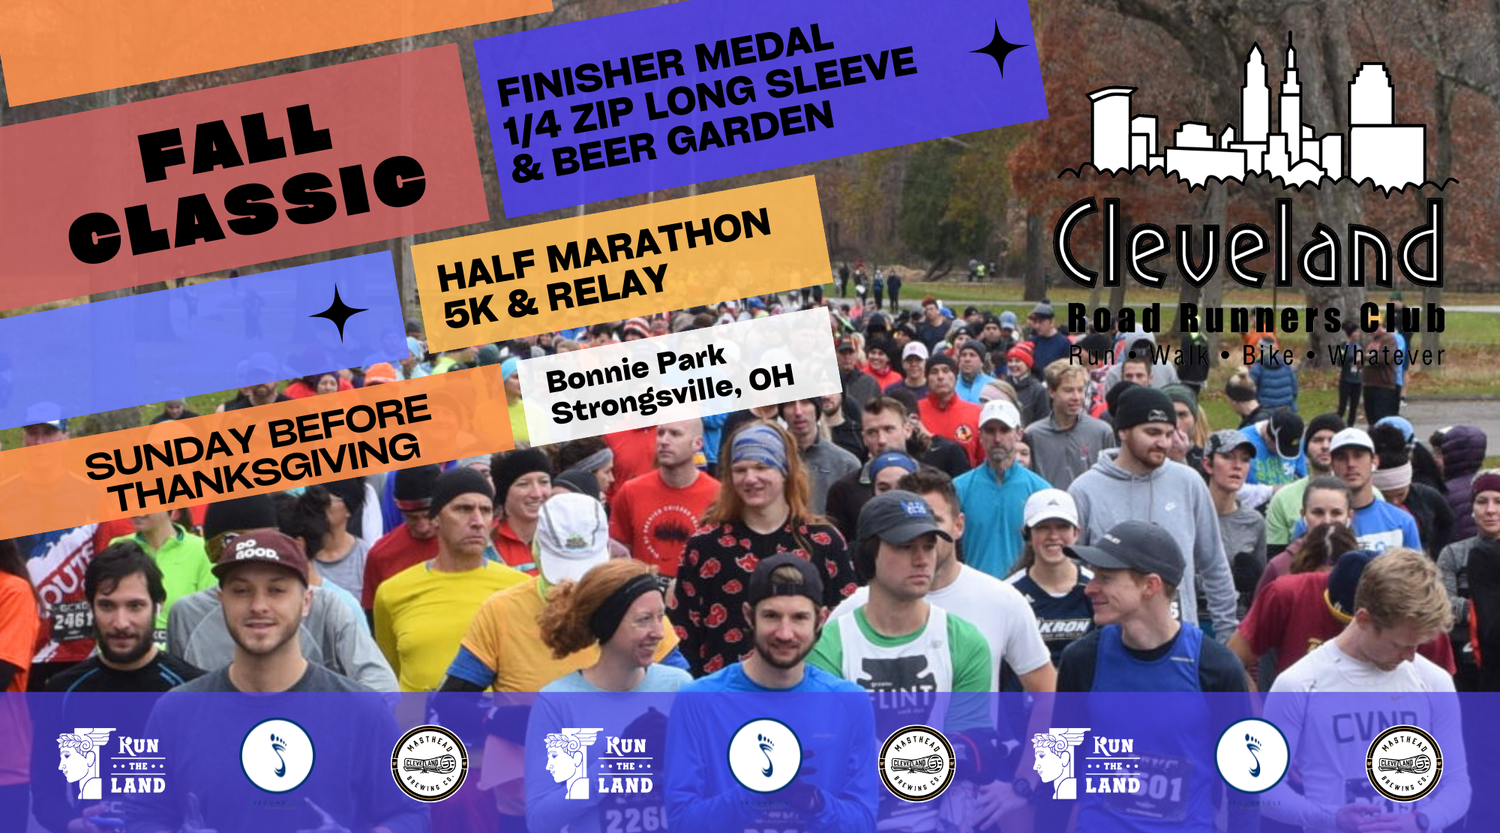 Fall Classic Half Marathon & 5k — Run The Land - Group Running, Craft Beer,  Events, & Merch